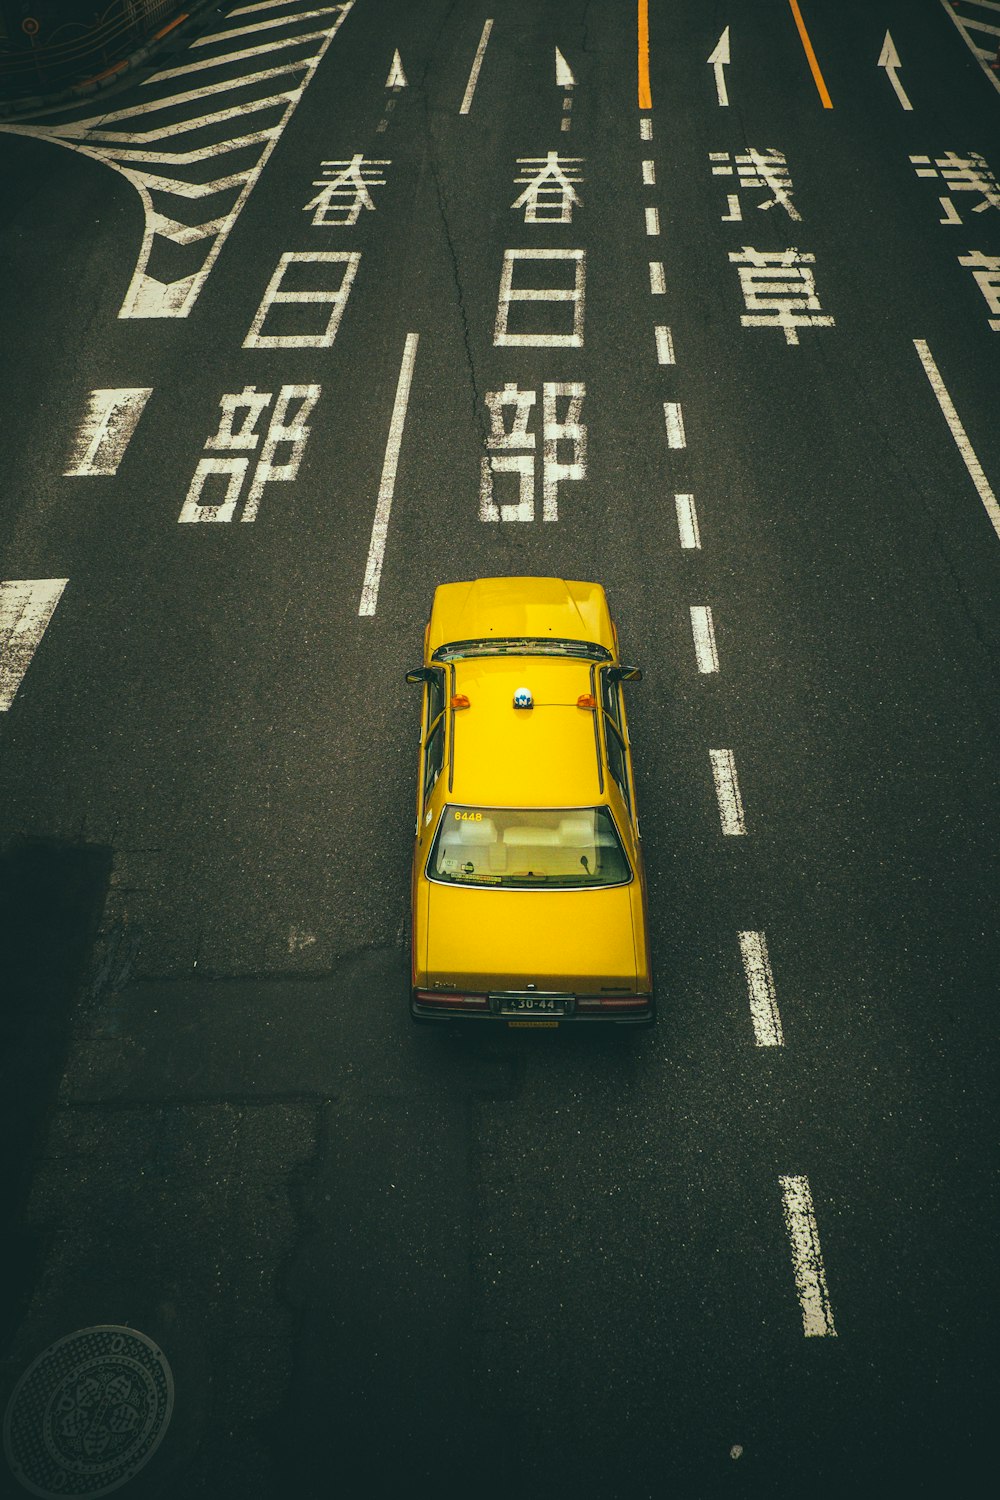 yellow vehicle on road